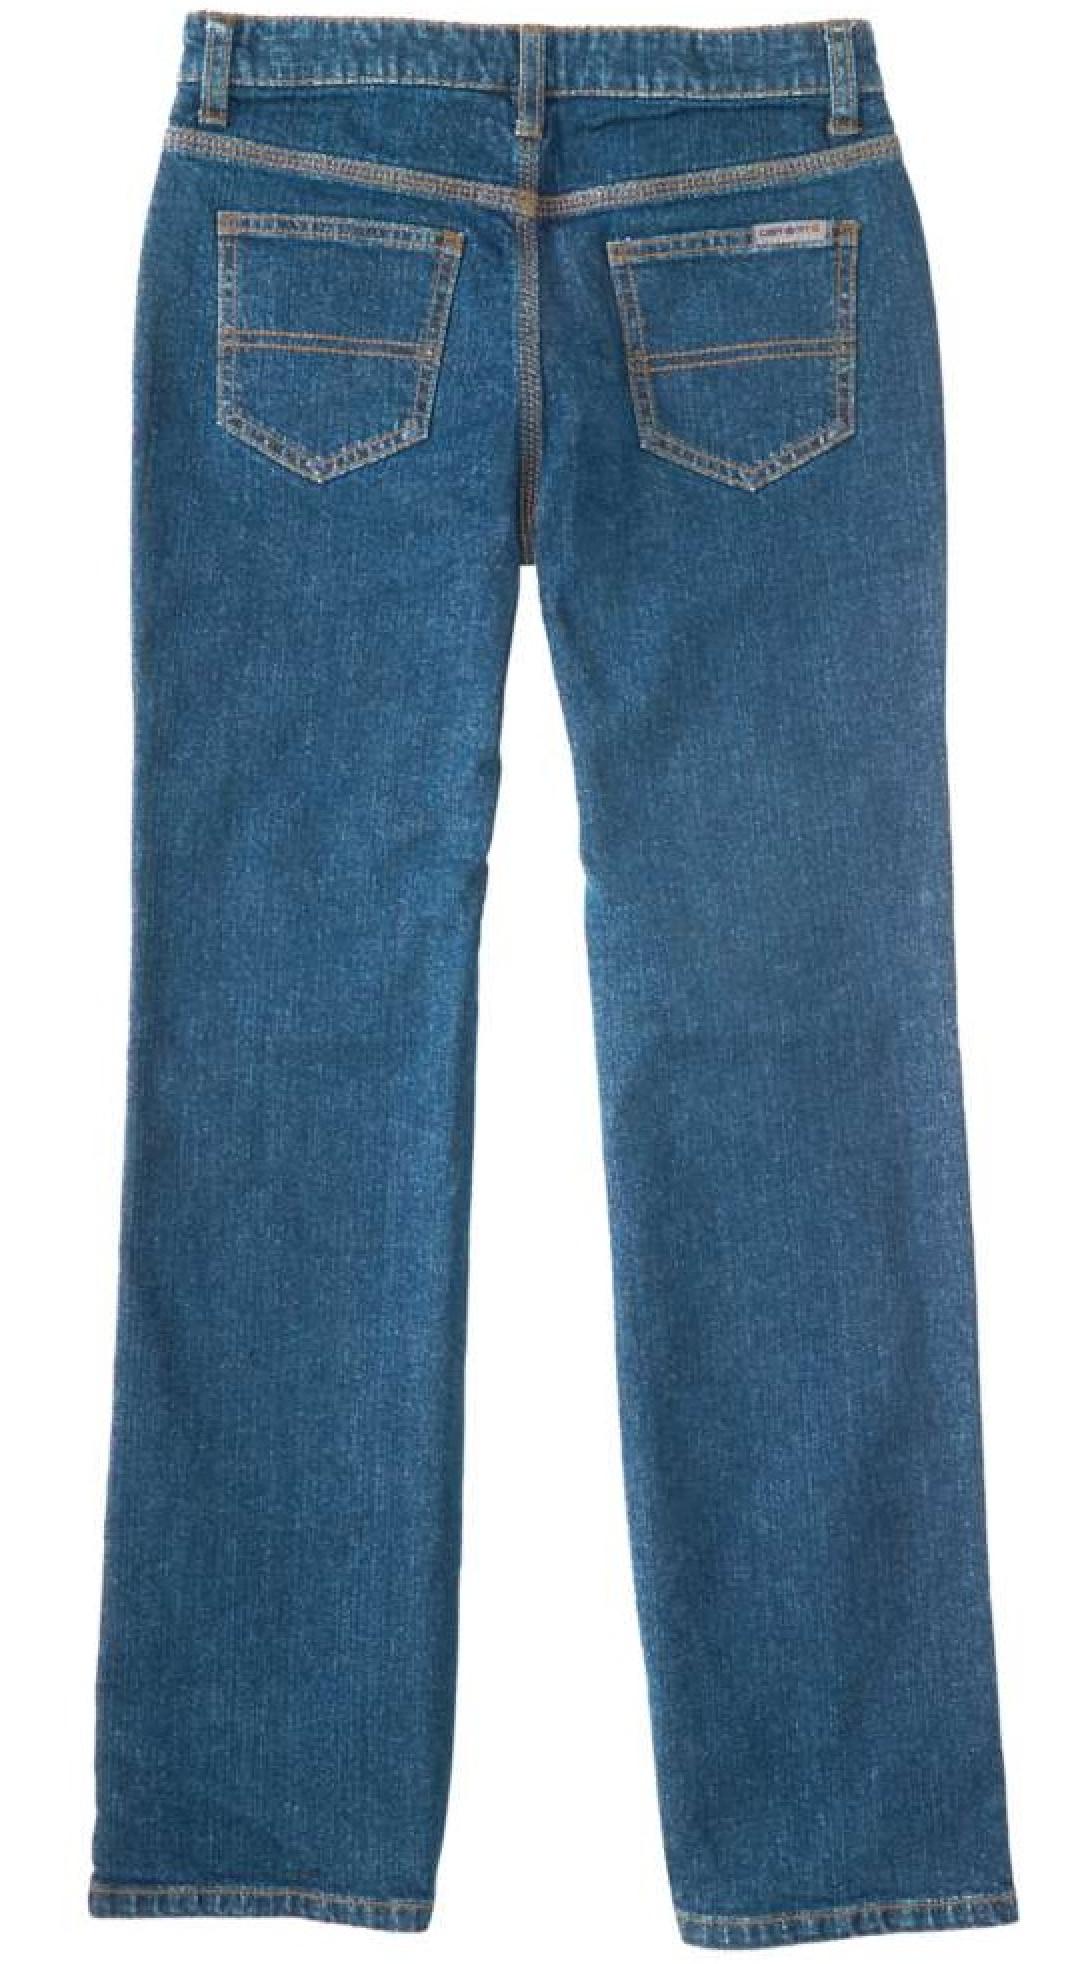 Carhartt Girl's Denim 5-Pocket Jean